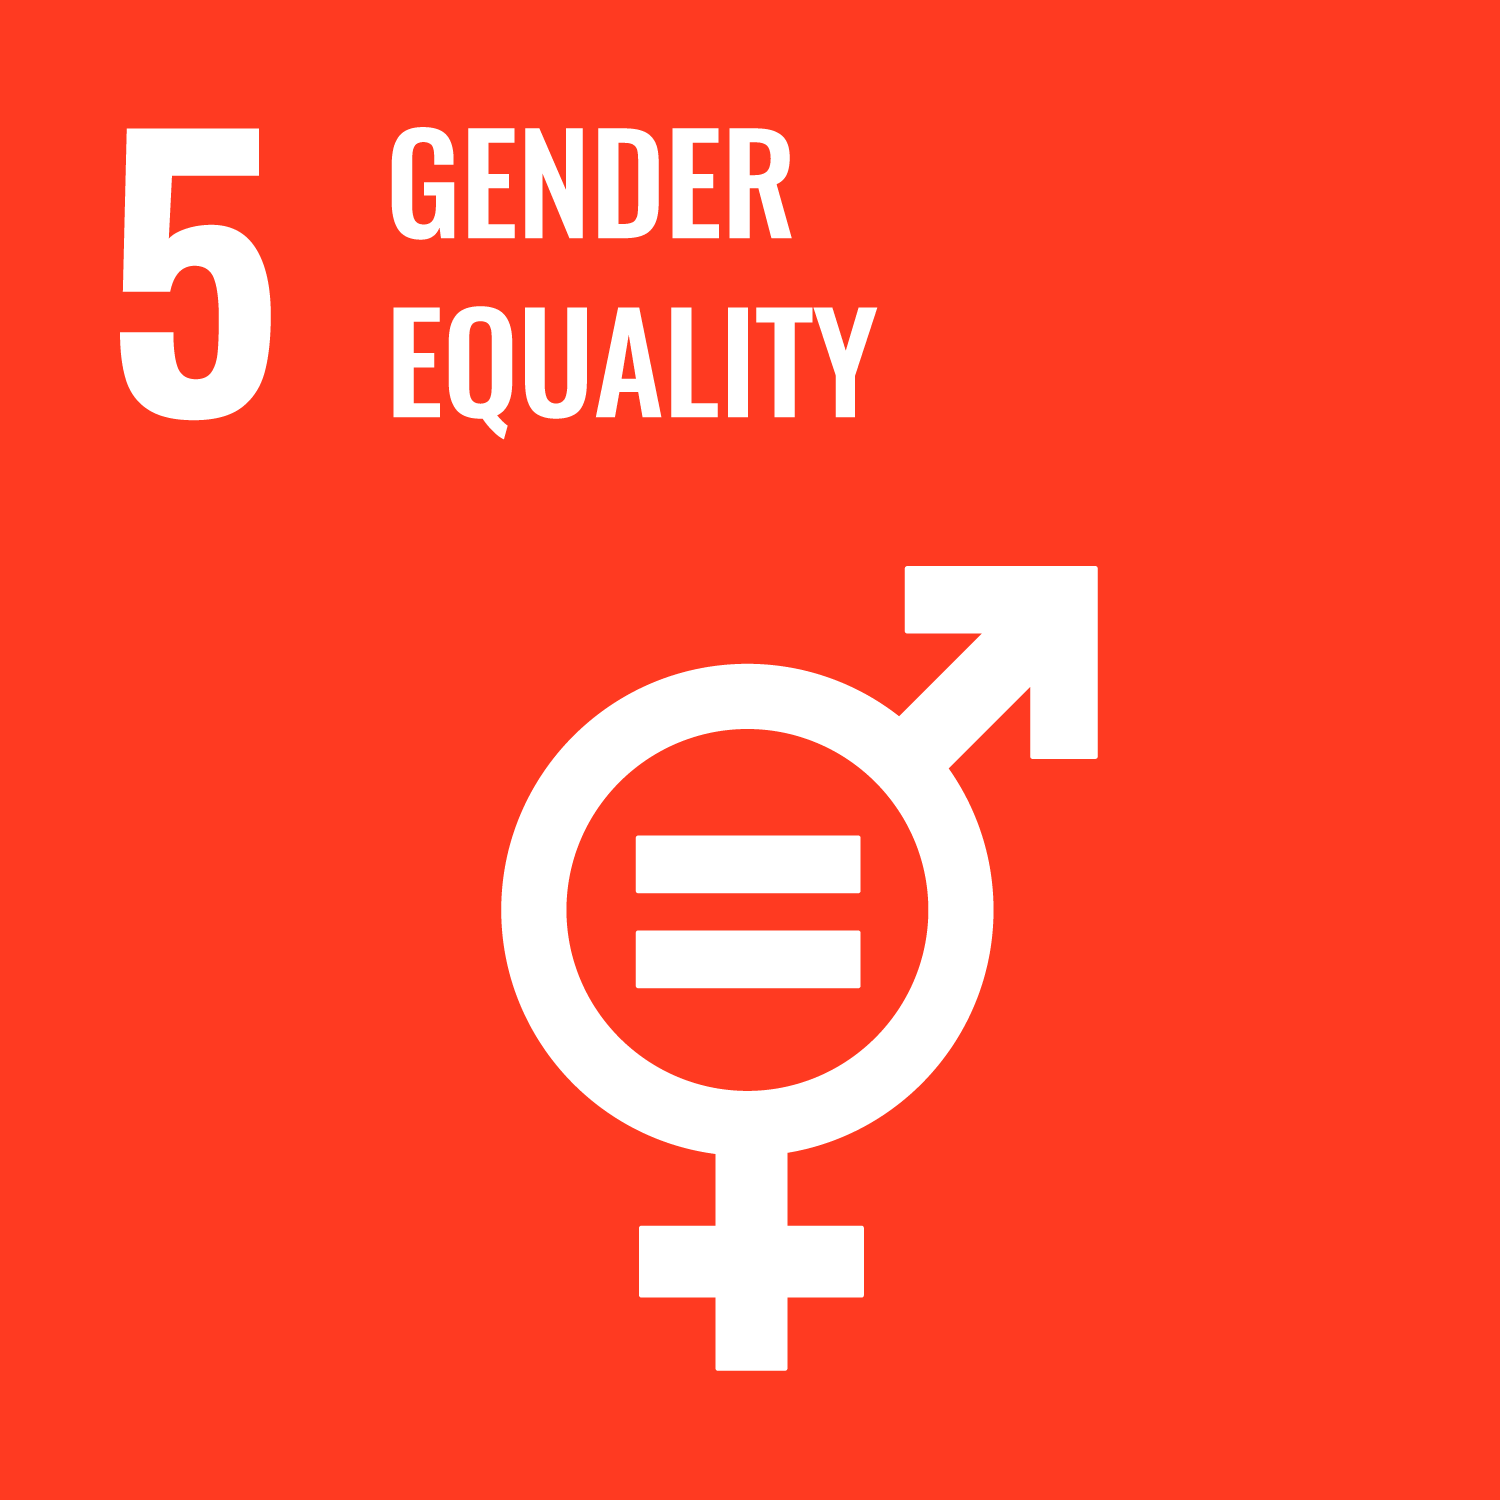 SDGs 5 GENDER EQUALITY